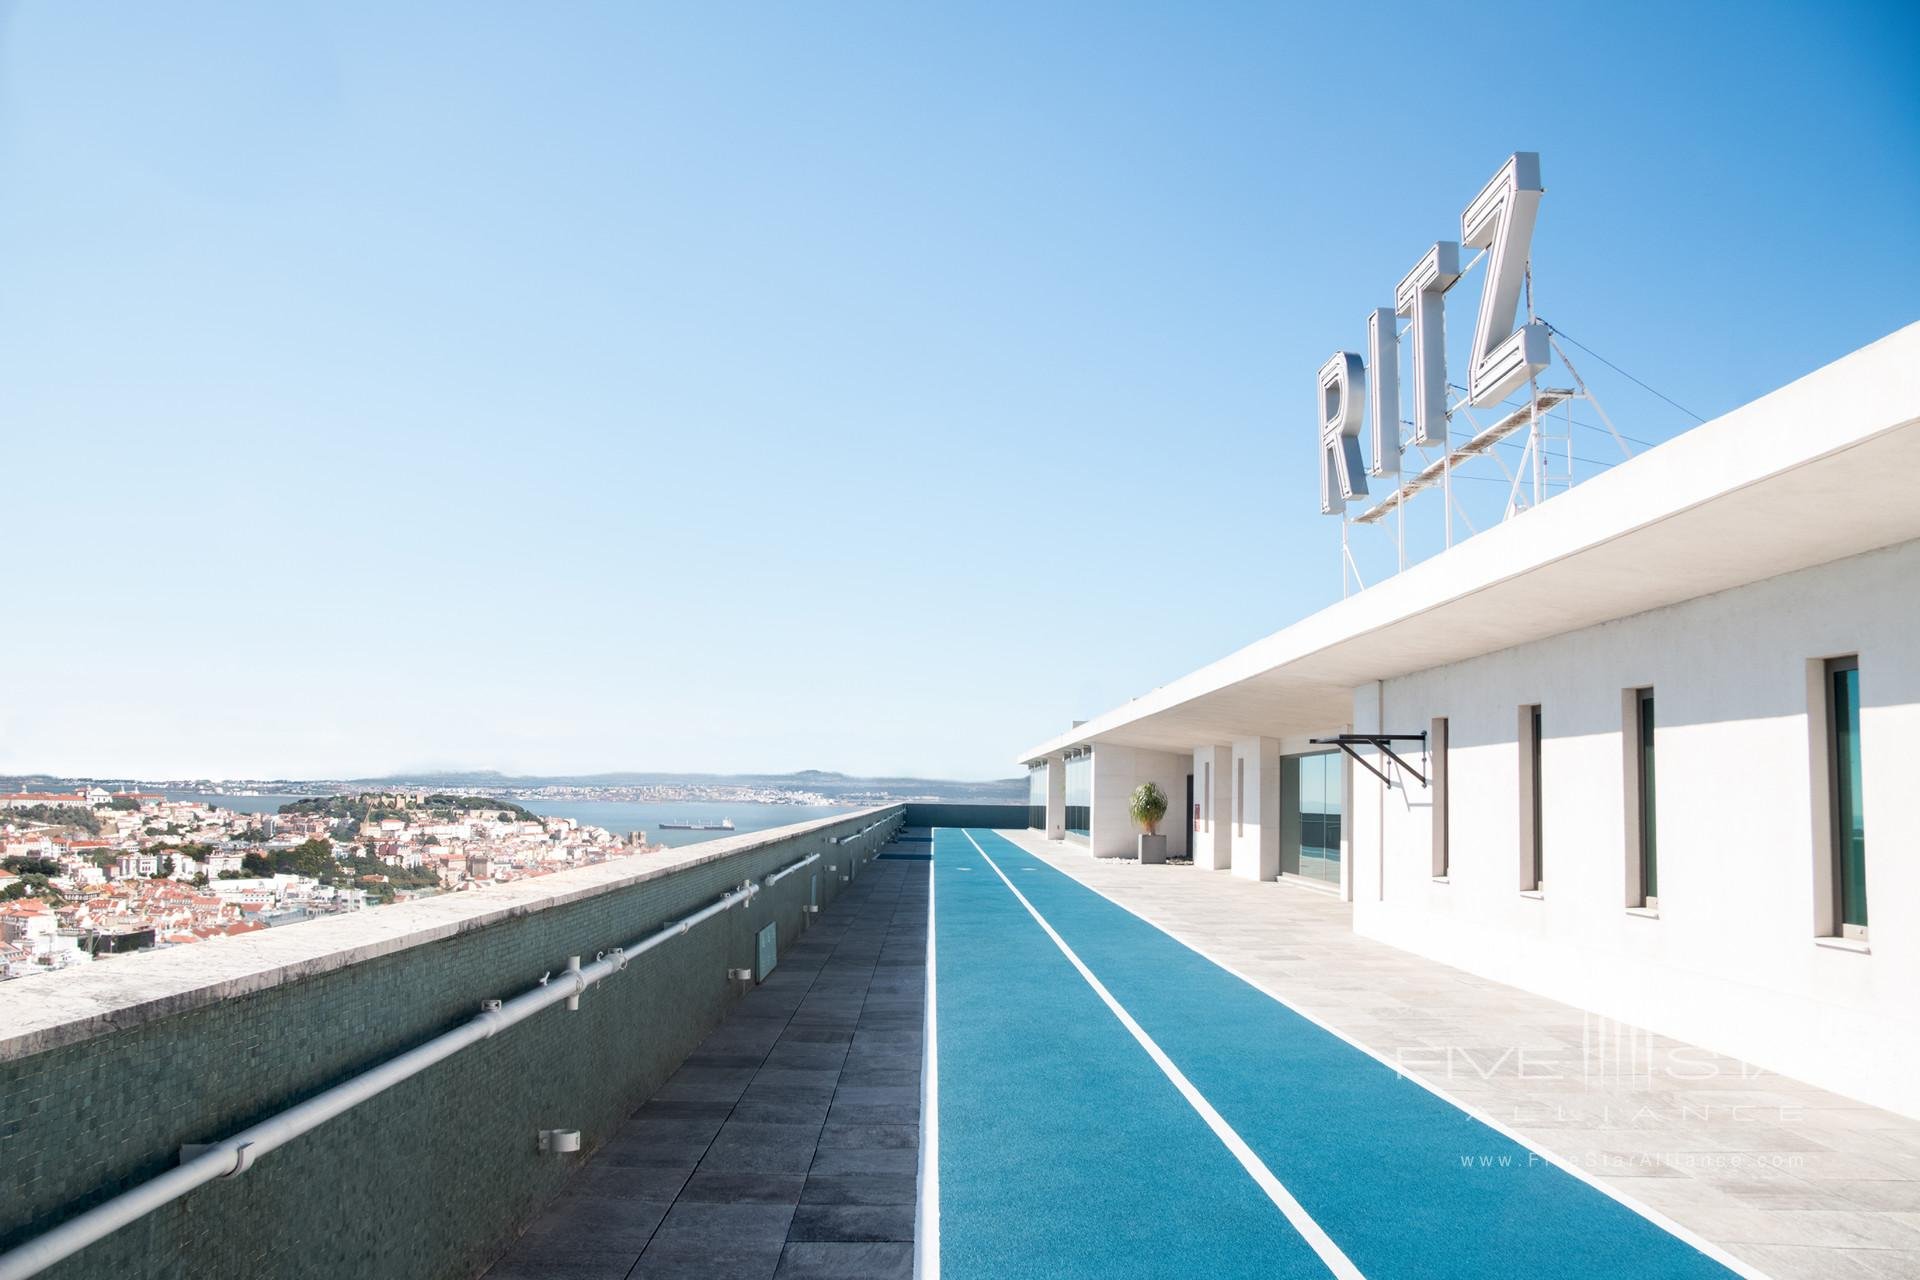 Ritz Four Seasons - Lisbon, Portugal